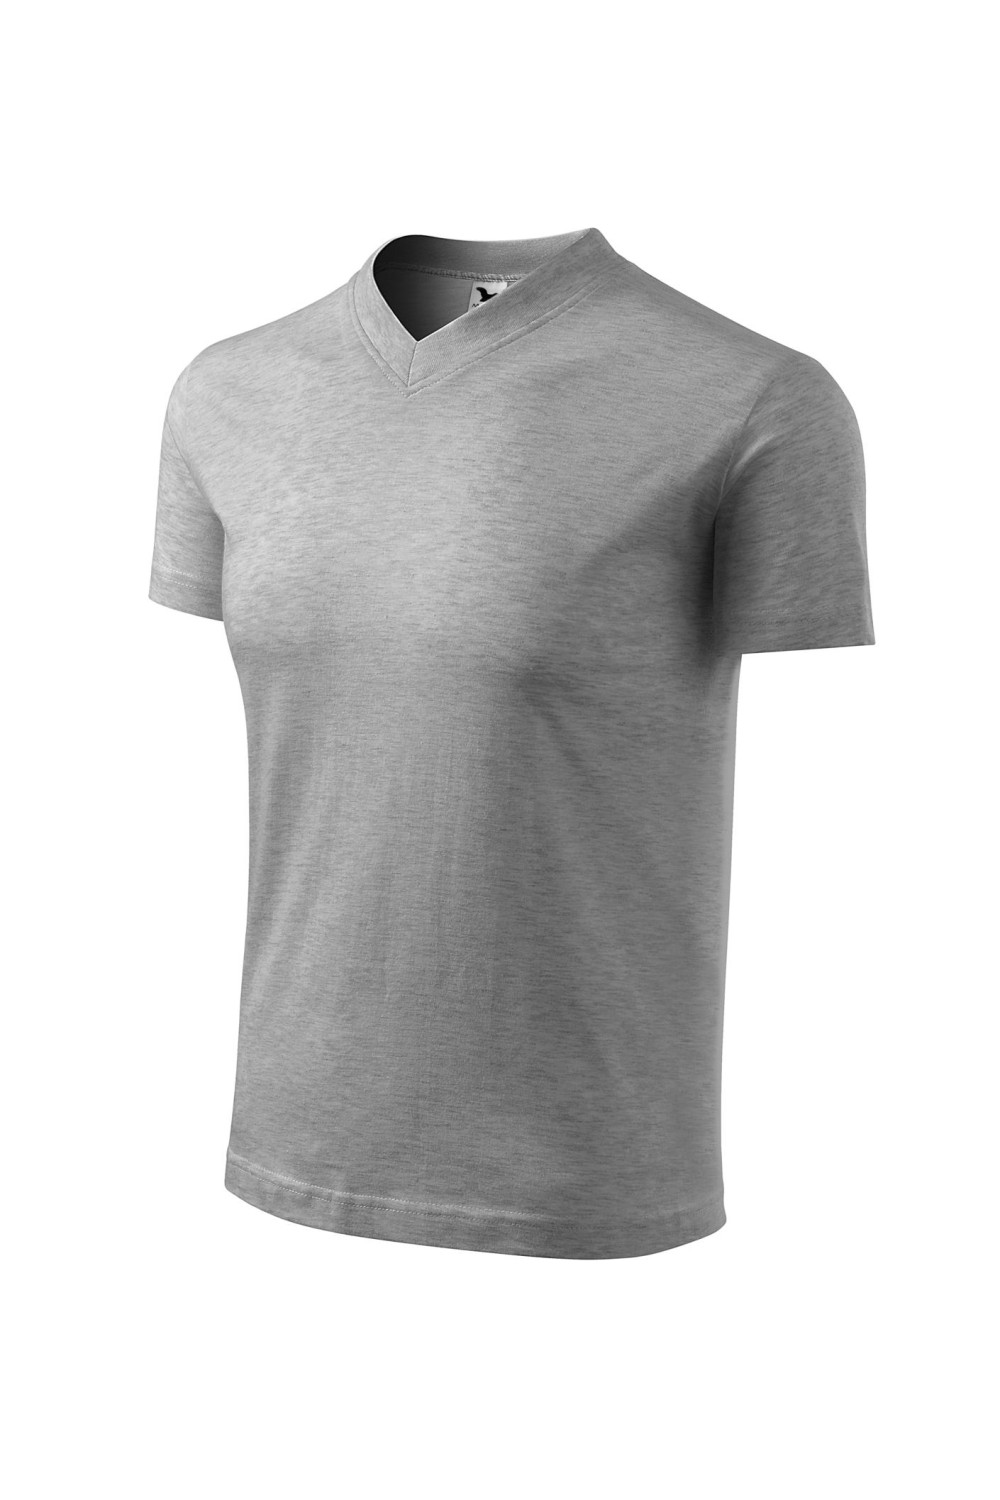 V-NECK 102 MALFINI Koszulka unisex 100% bawełna t-shirt ciemny melanż